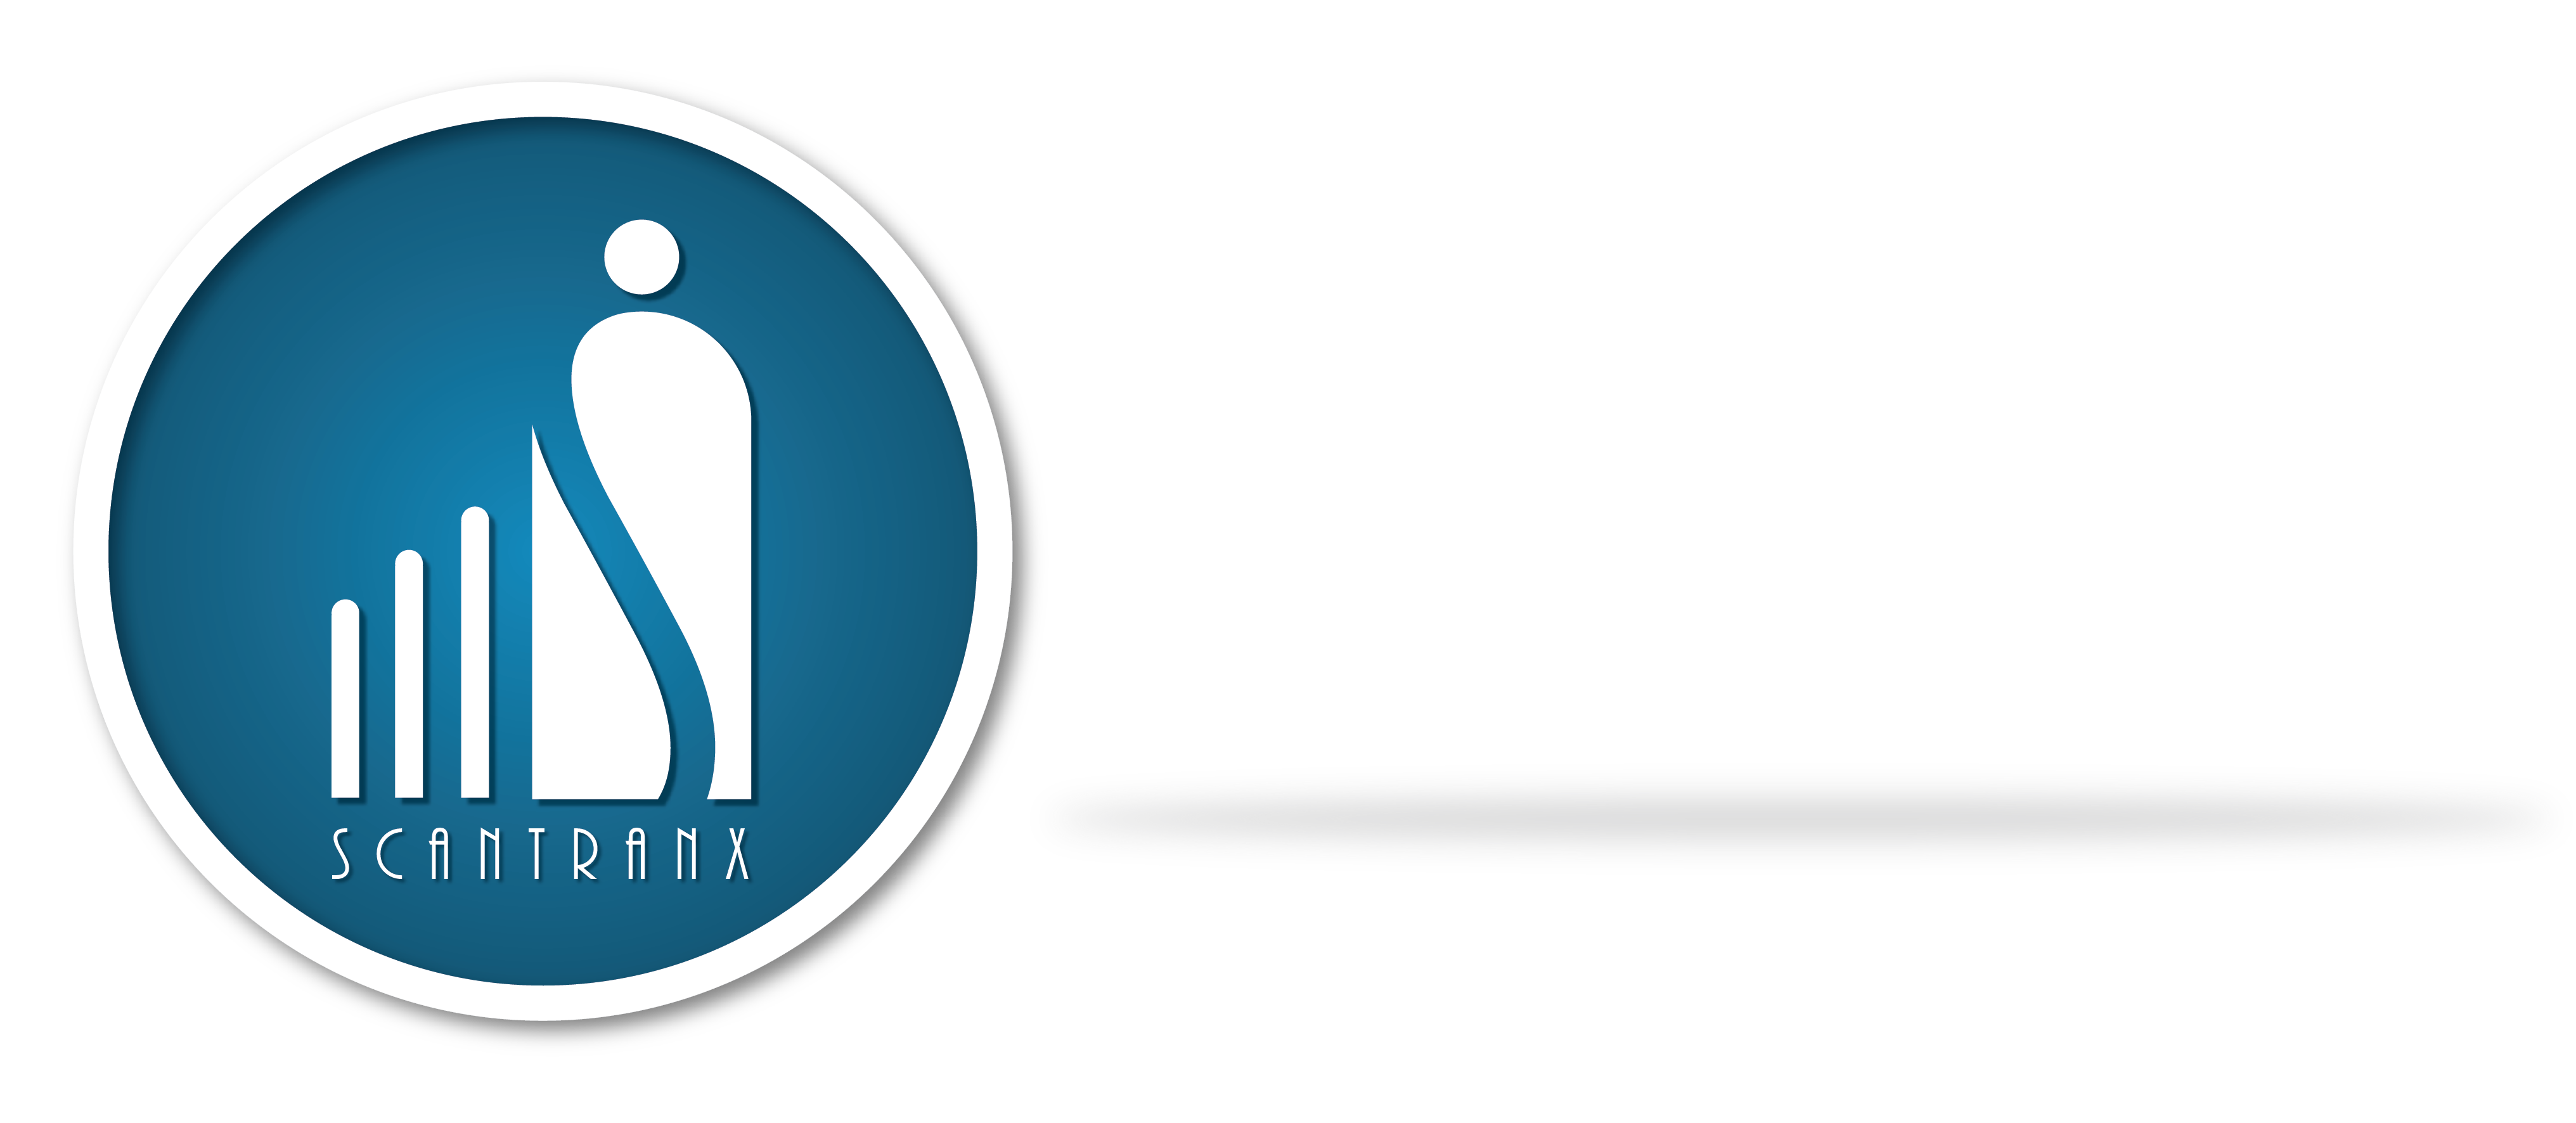 scantranx logo